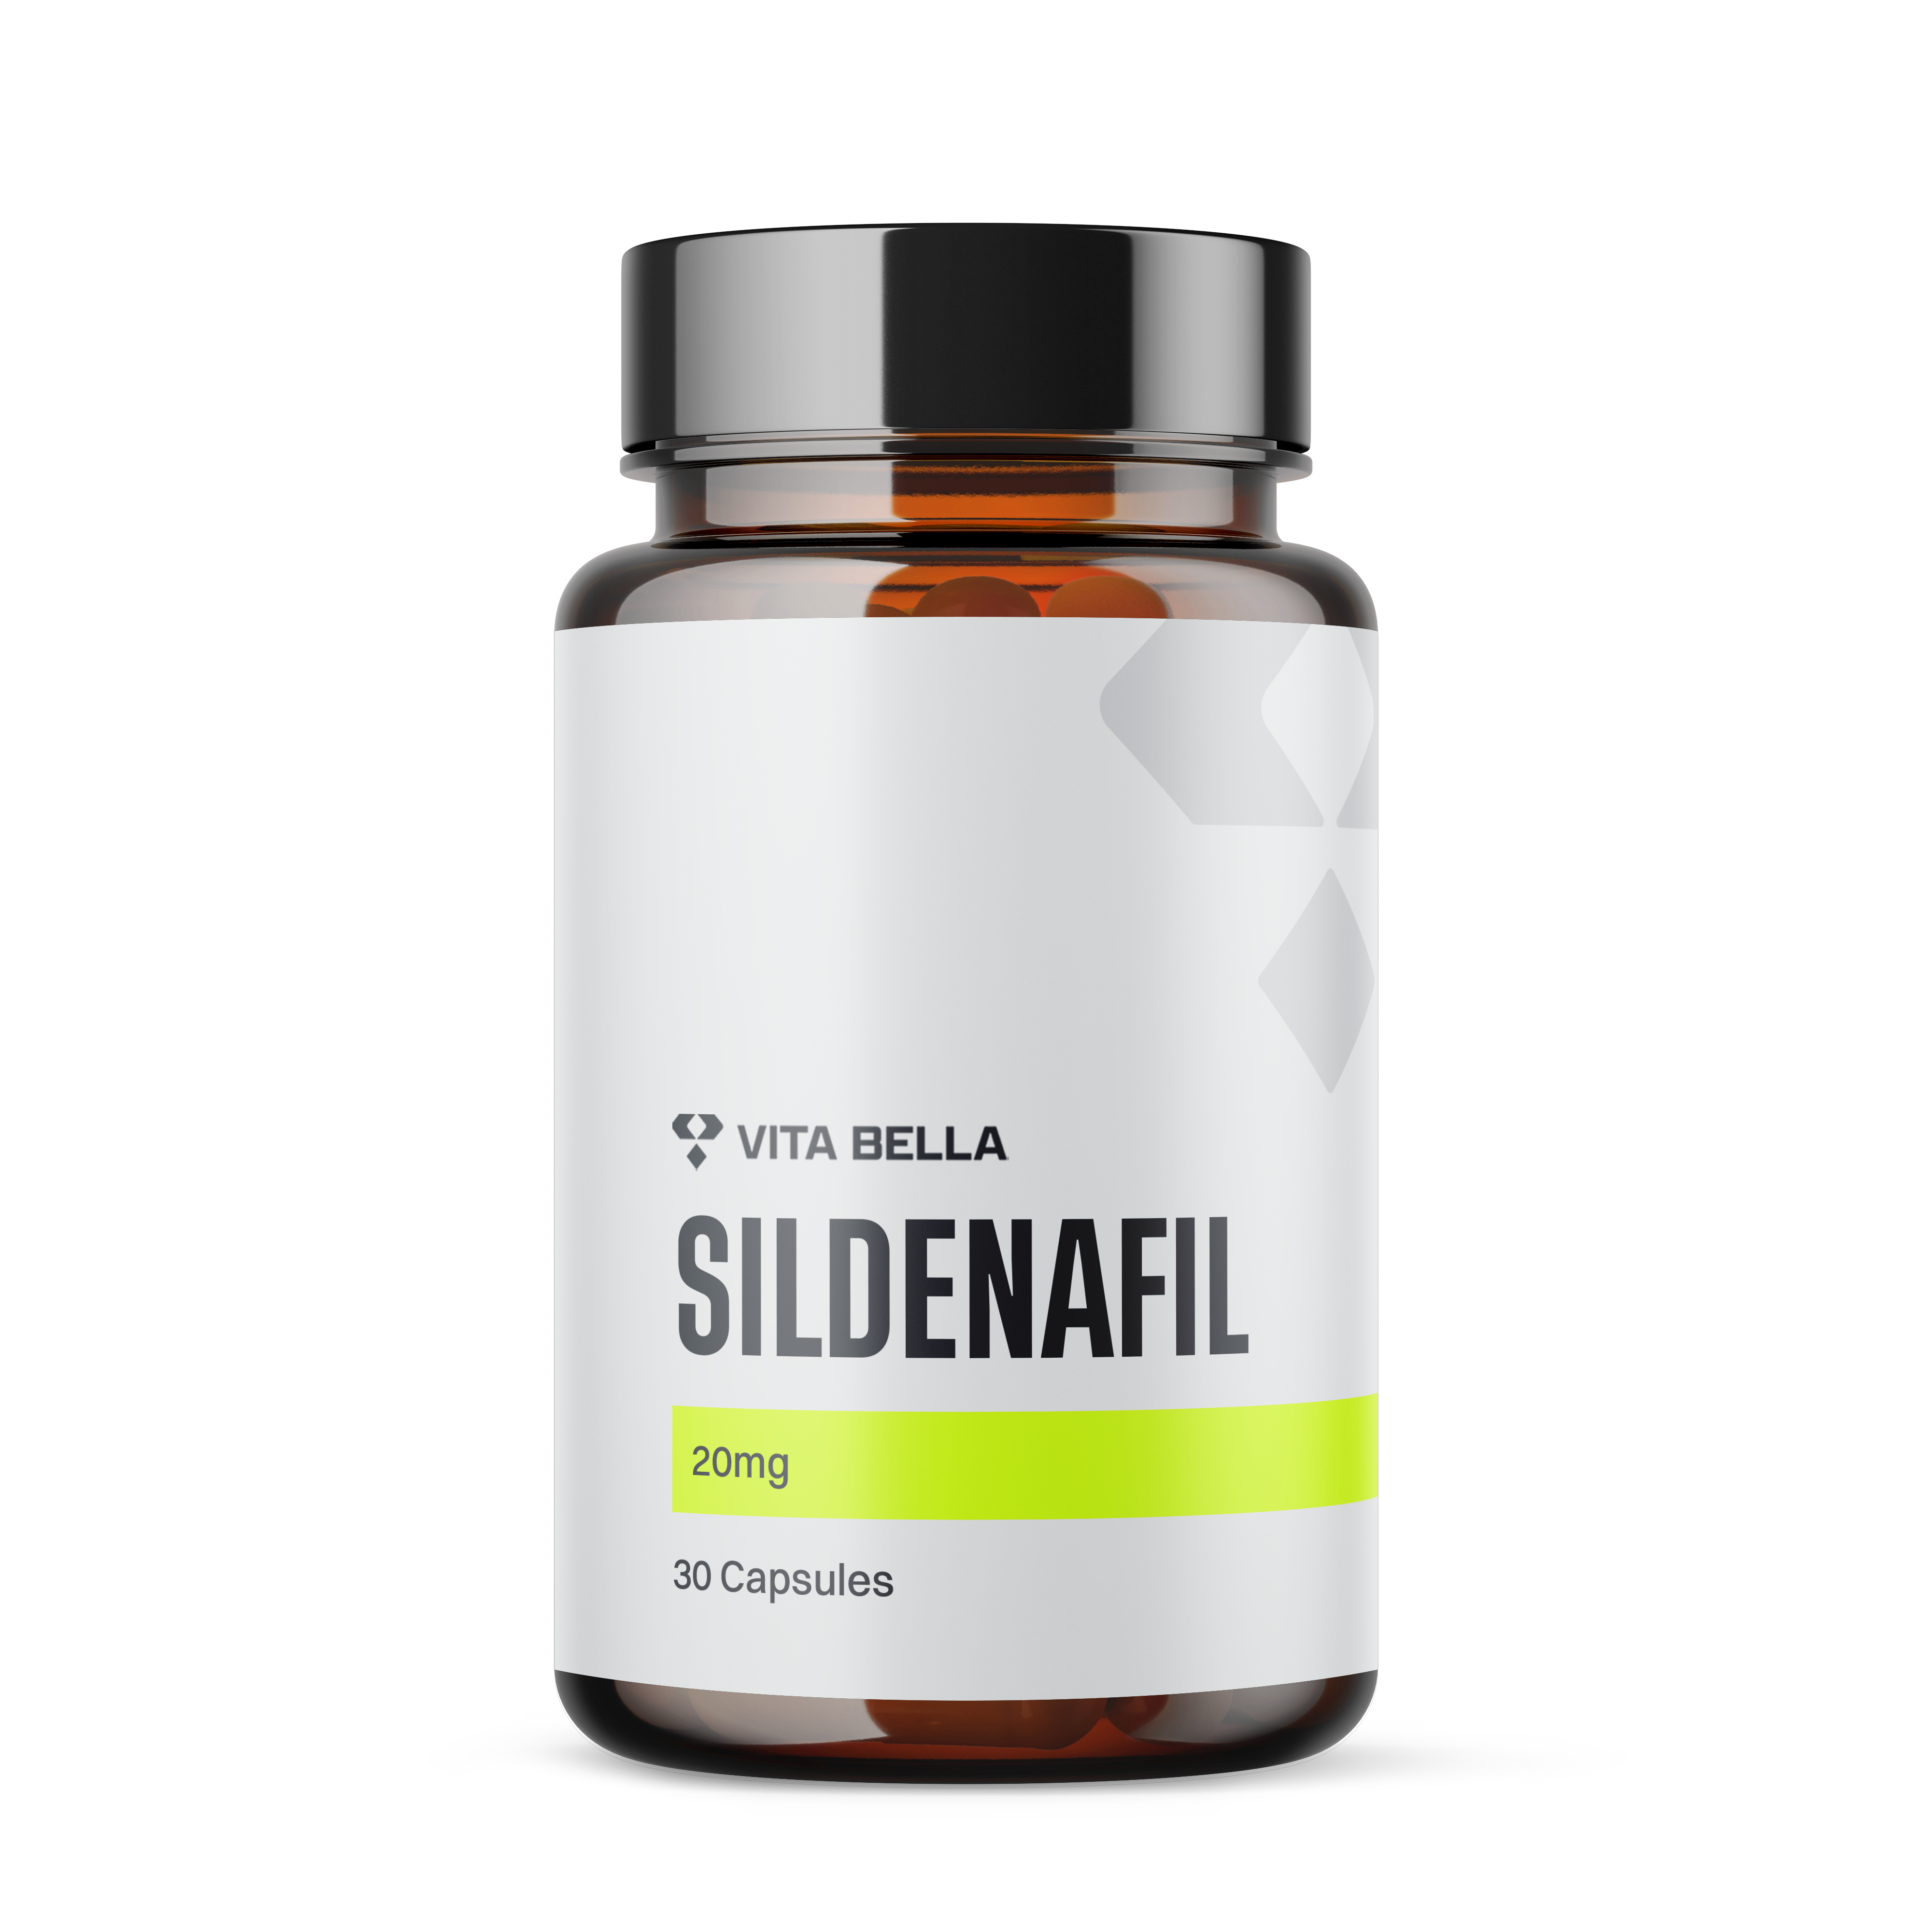 Sildenafil capsules